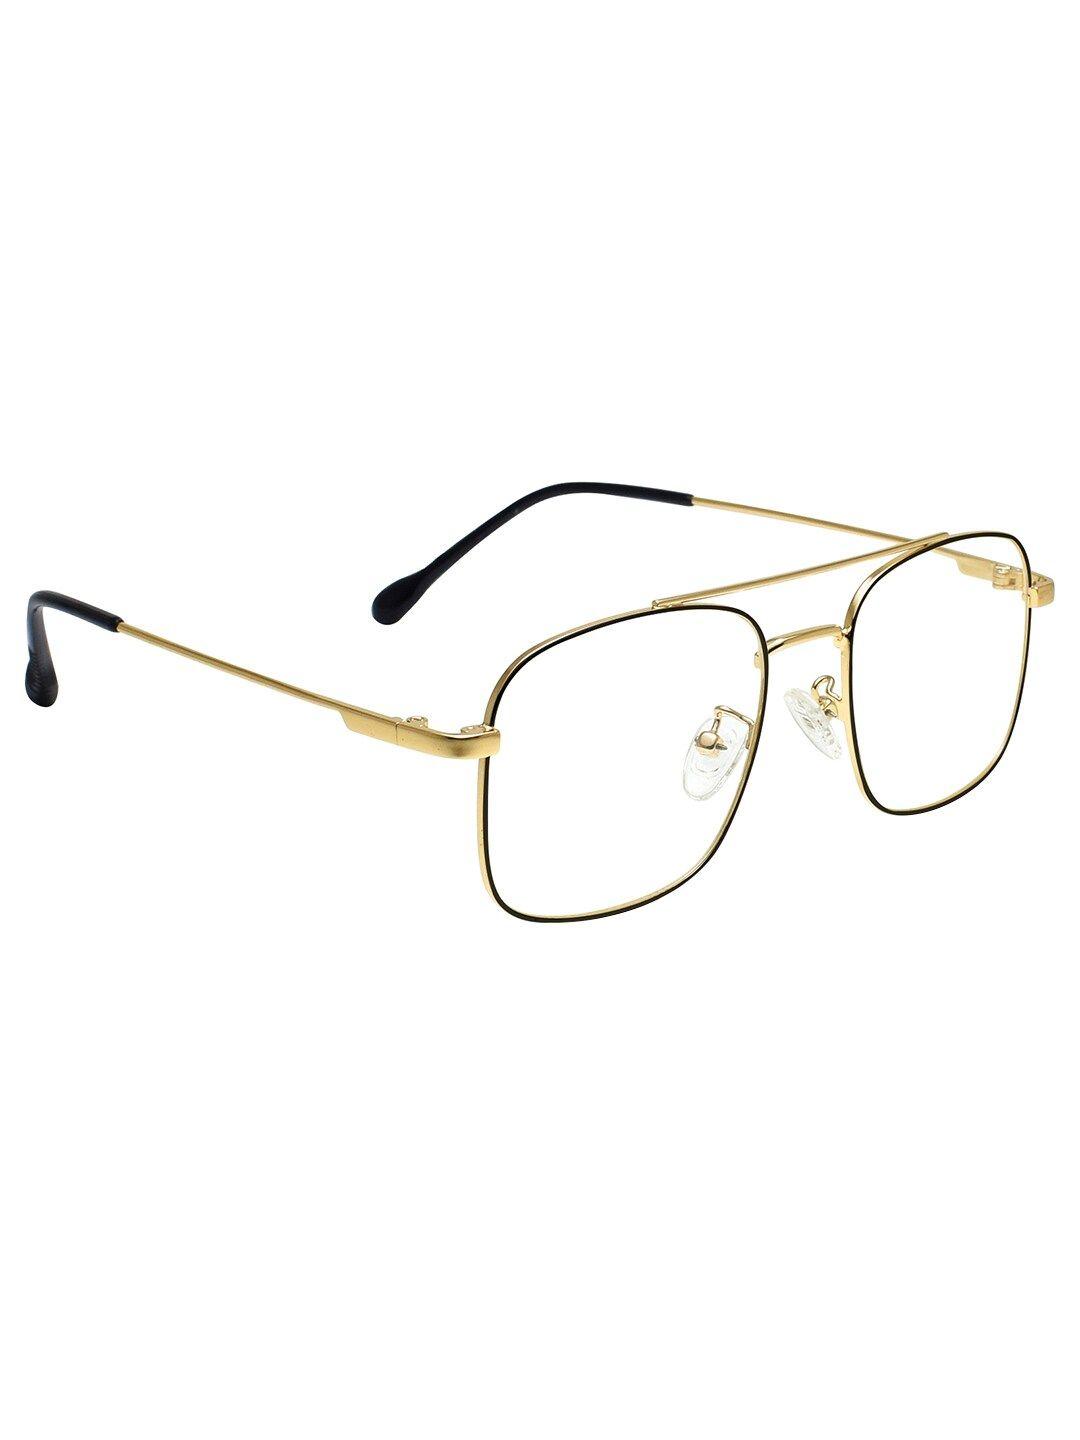 peter jones eyewear unisex black & gold-toned full rim square frames